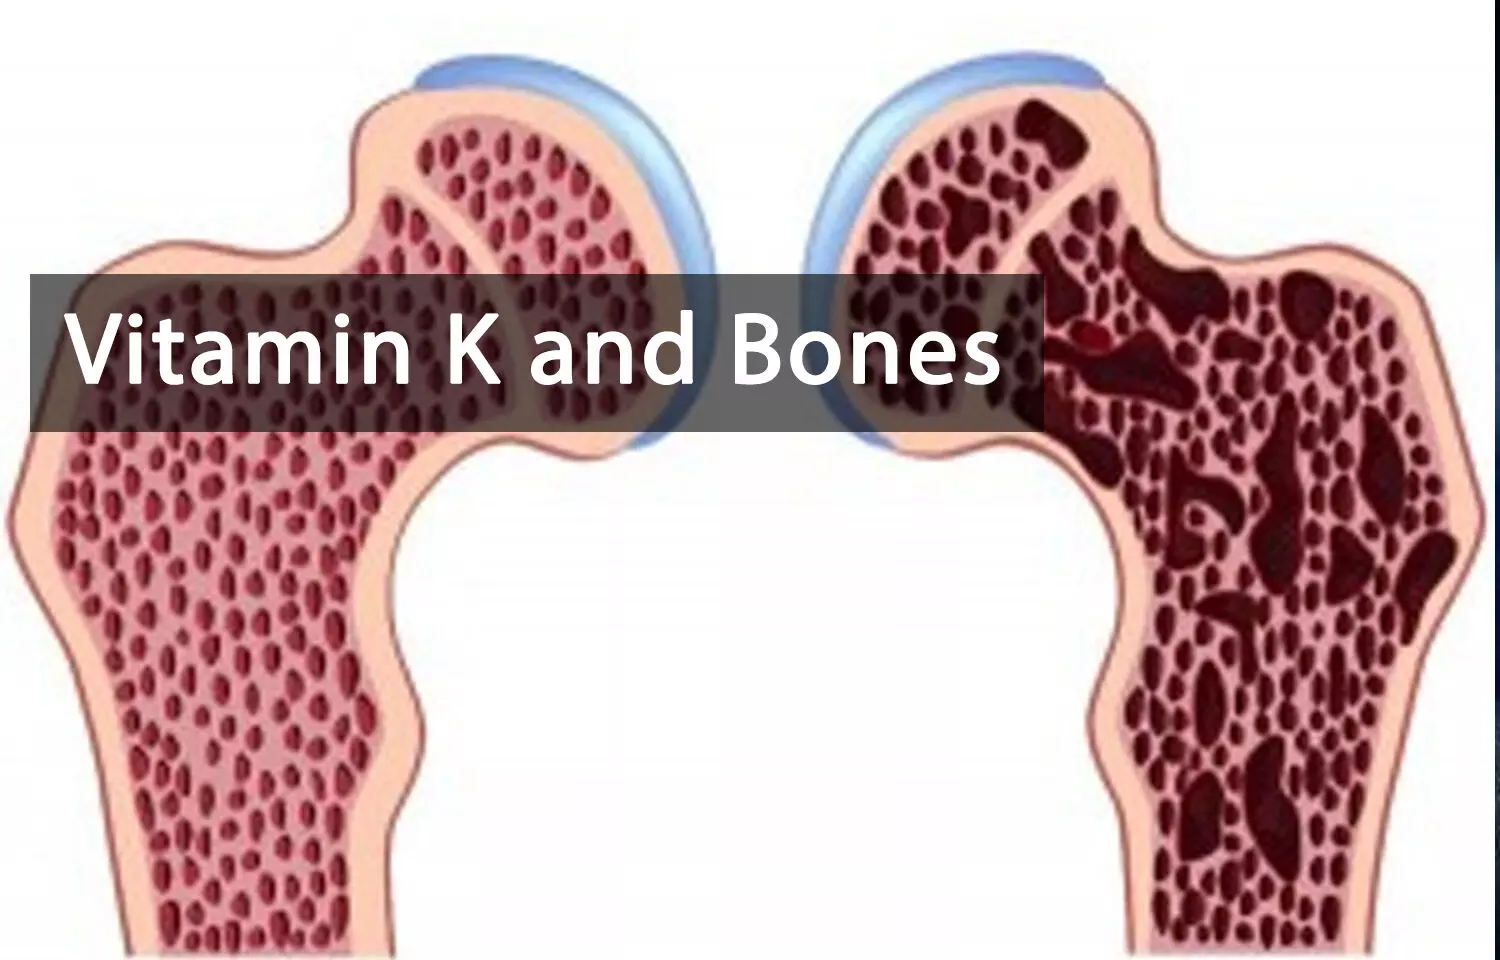 Role of Vitamin K Supplement in Increasing Bone Mineral Density in Postmenopausal Women